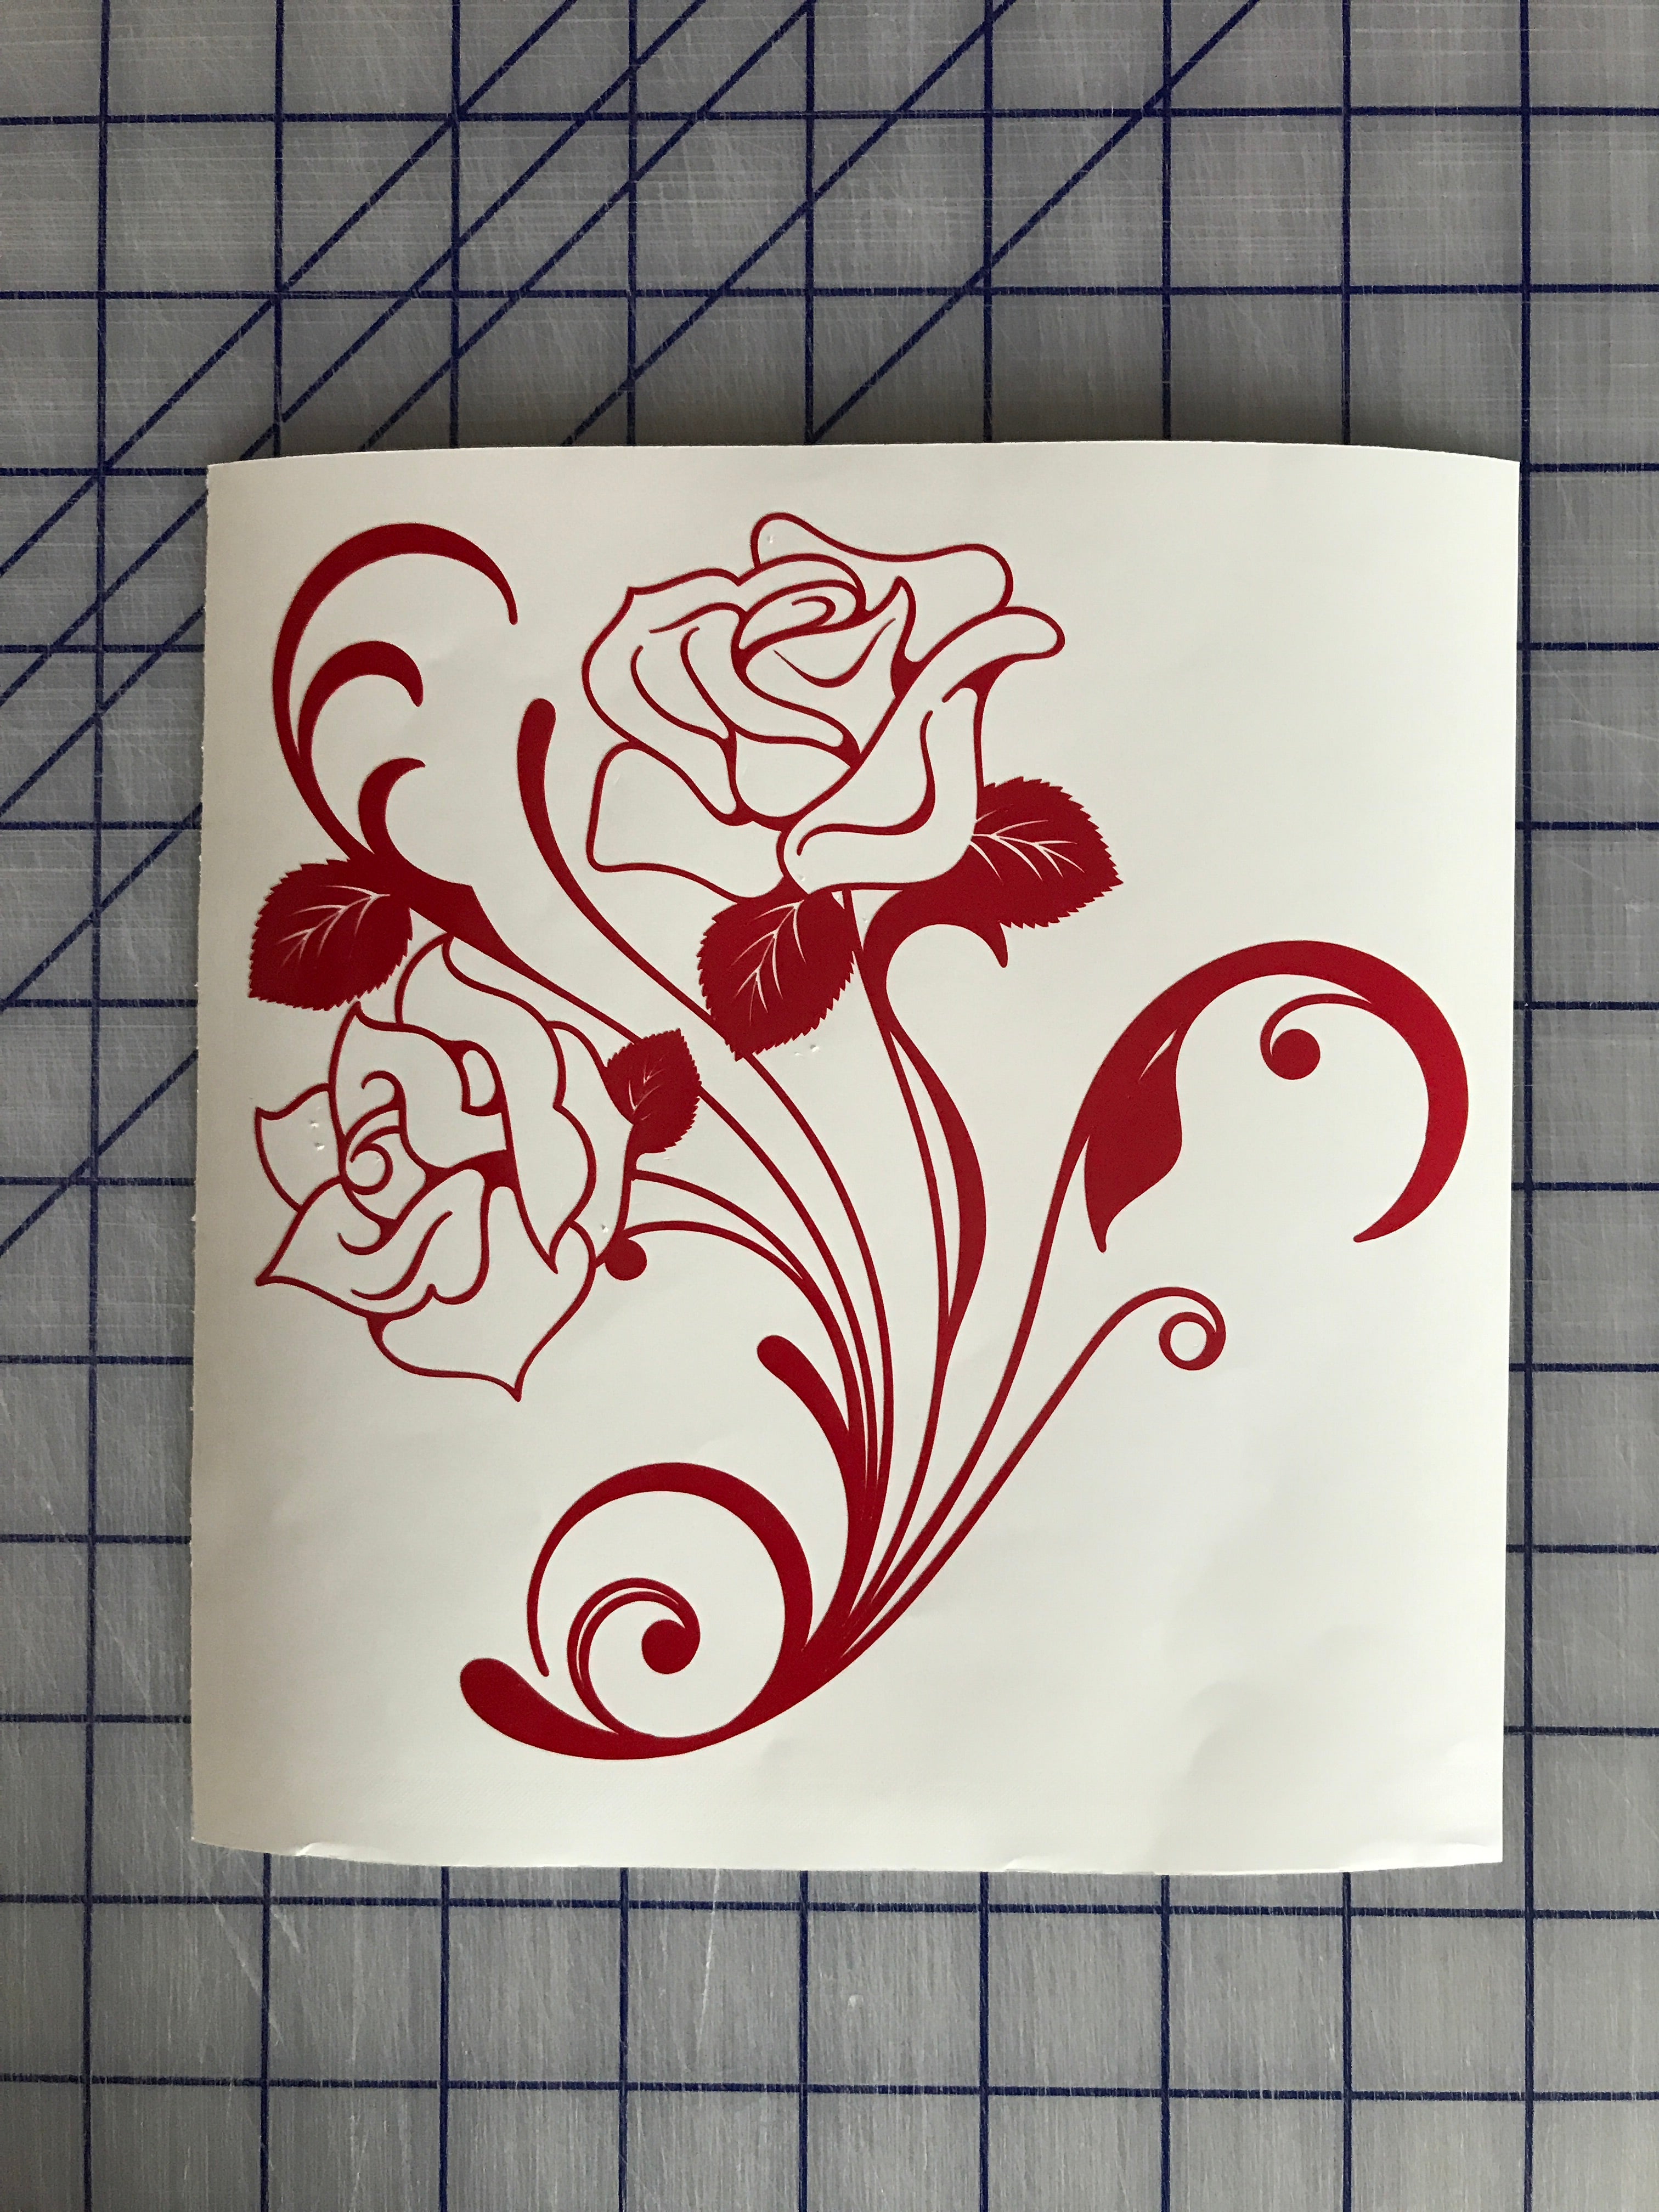 simple tribal rose drawings